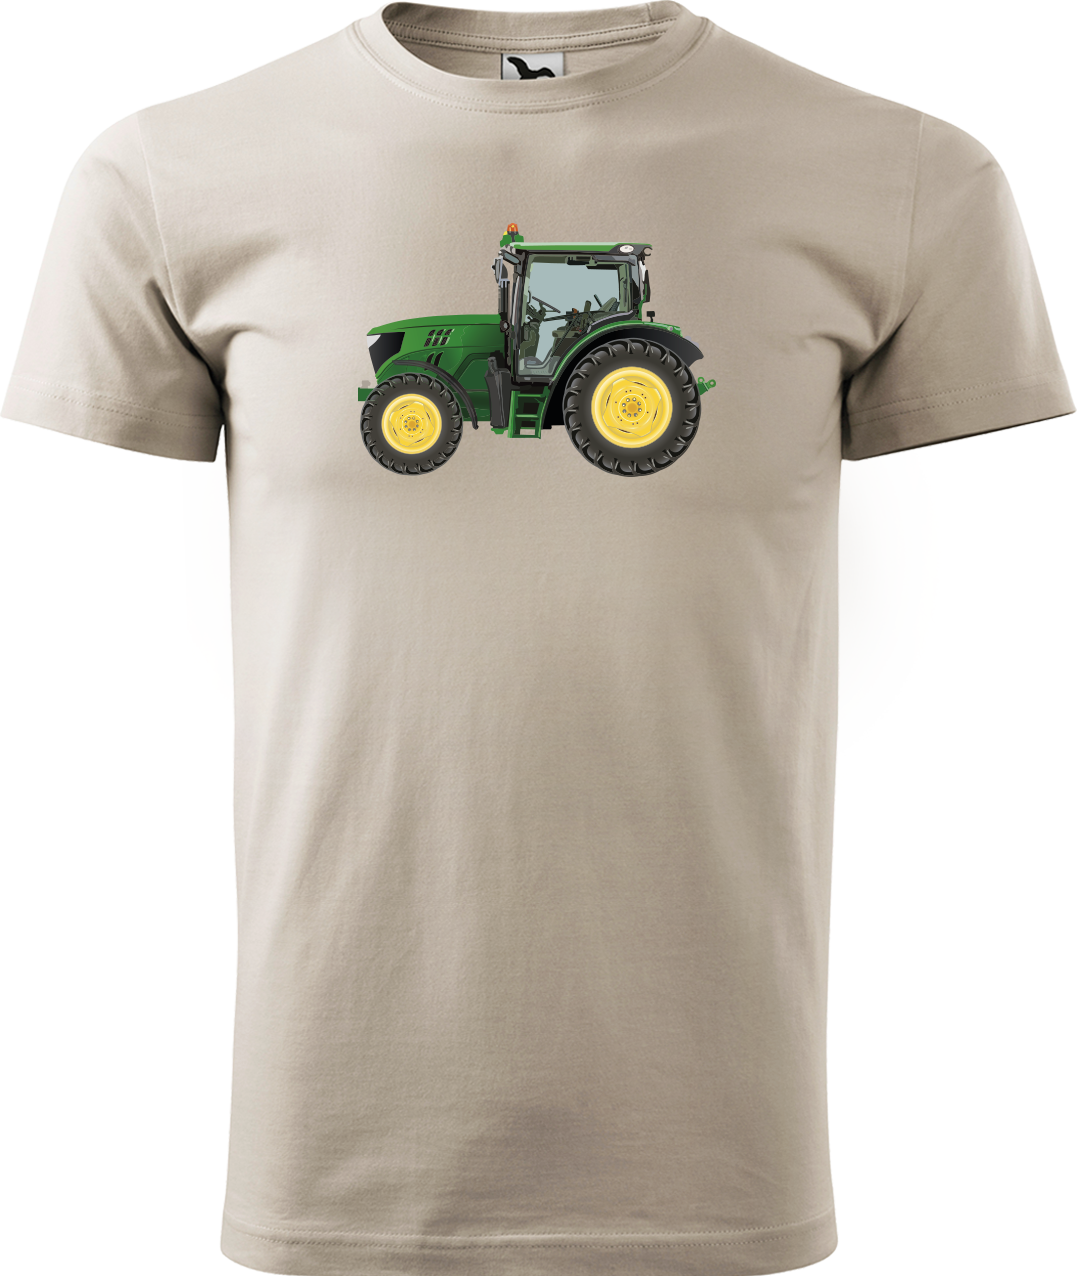 Tričko s traktorem - Zelený traktor Velikost: 4XL, Barva: Béžová (51)